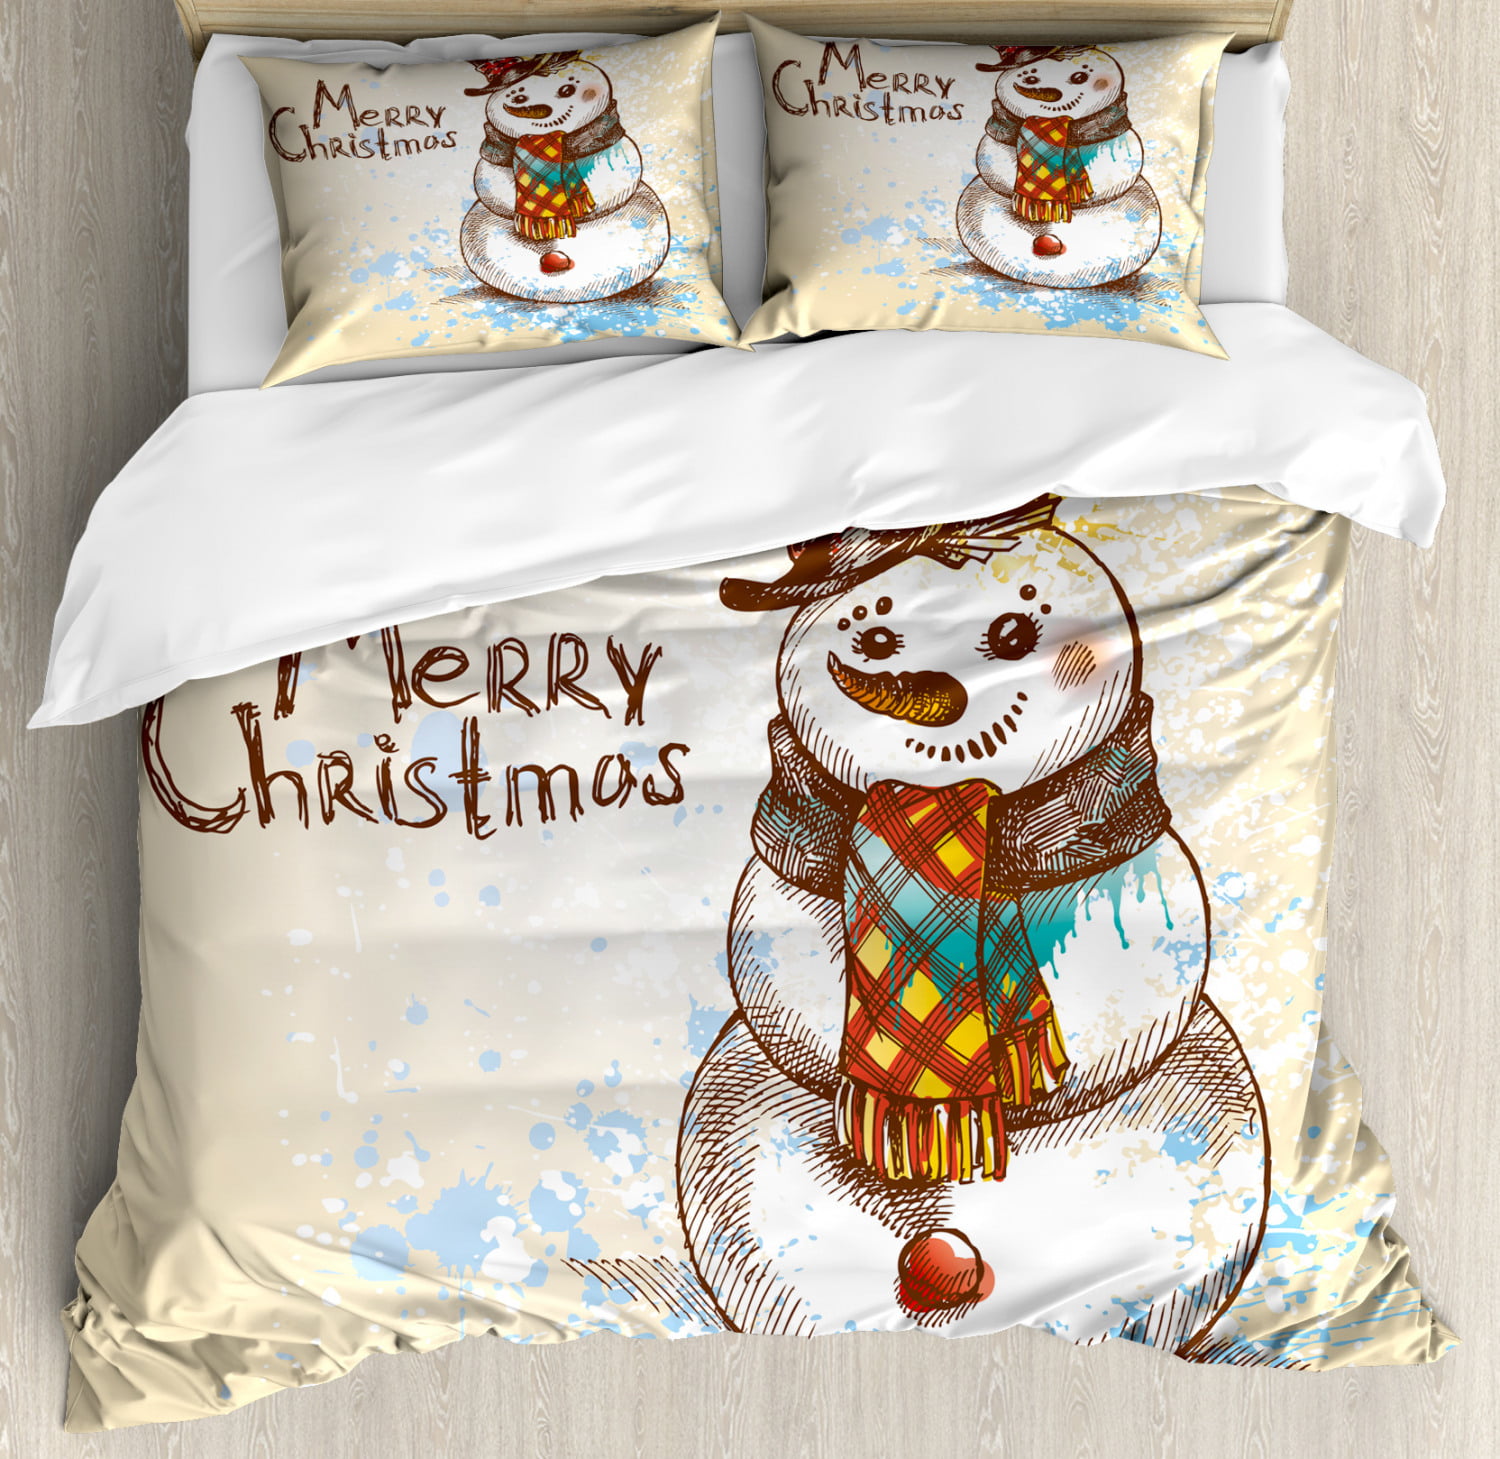 Snowman Duvet Cover Set Artistic Snowman With Winter Accessories